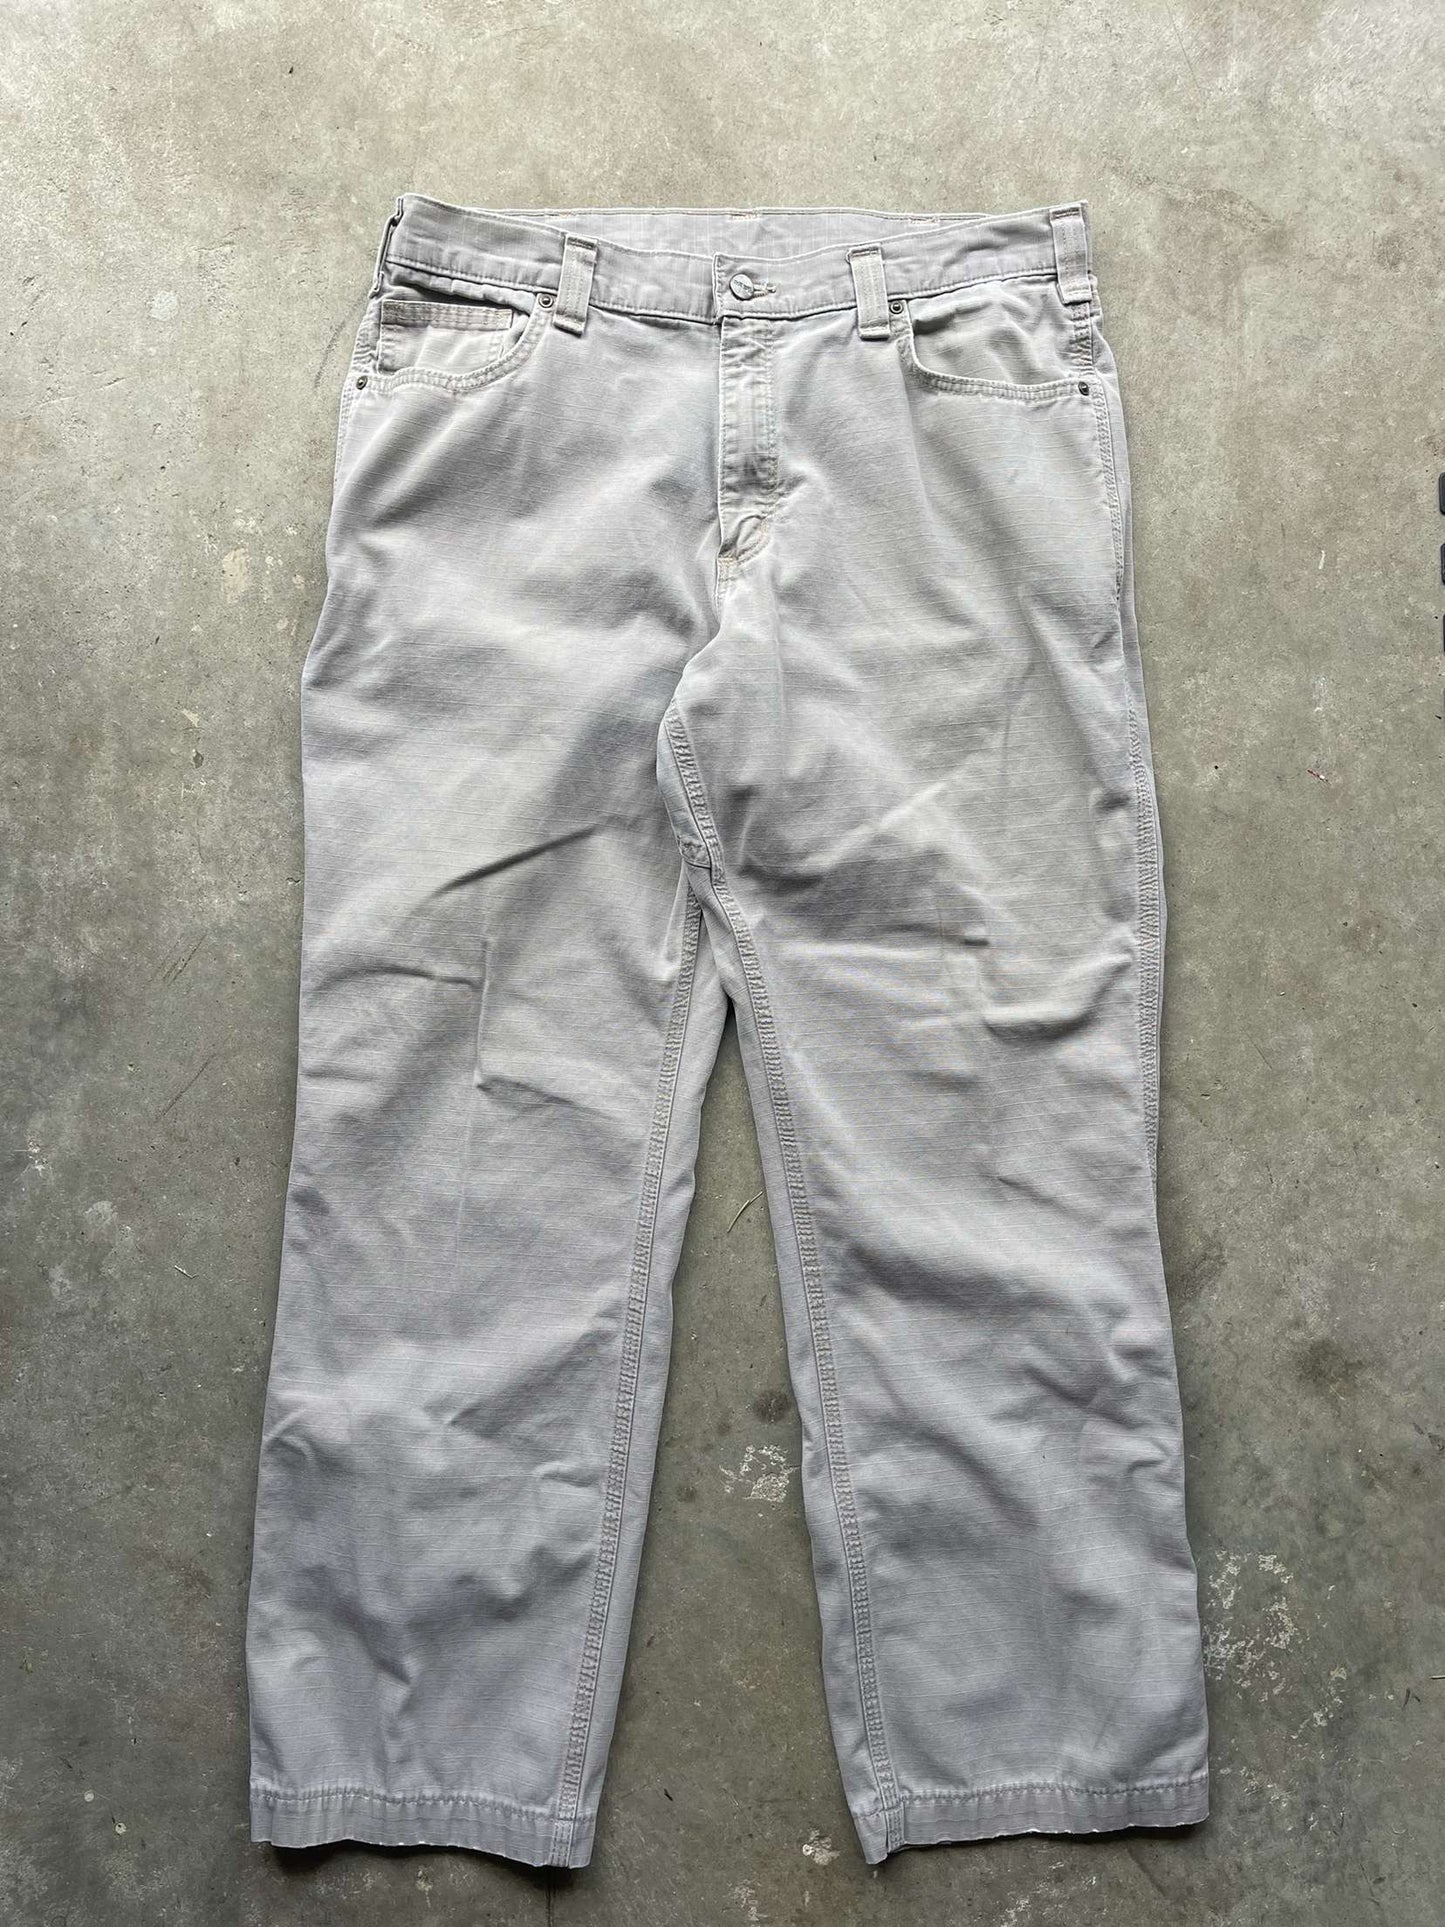 36x30 Carhartt Pants